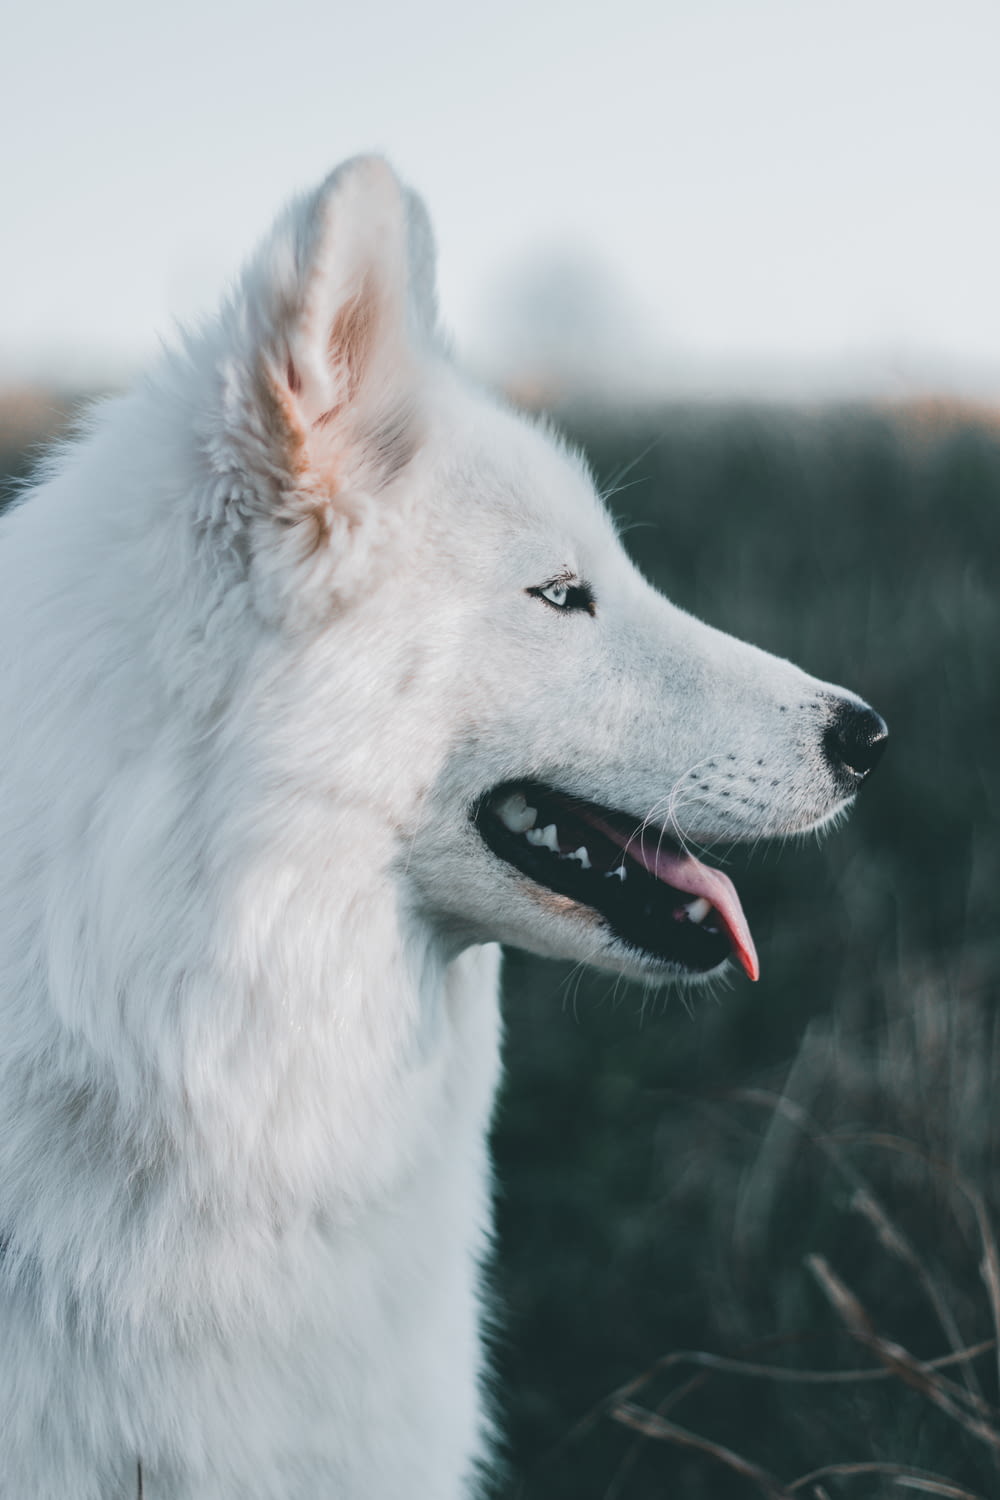 fotografia a fuoco superficiale di cane bianco a pelo lungo